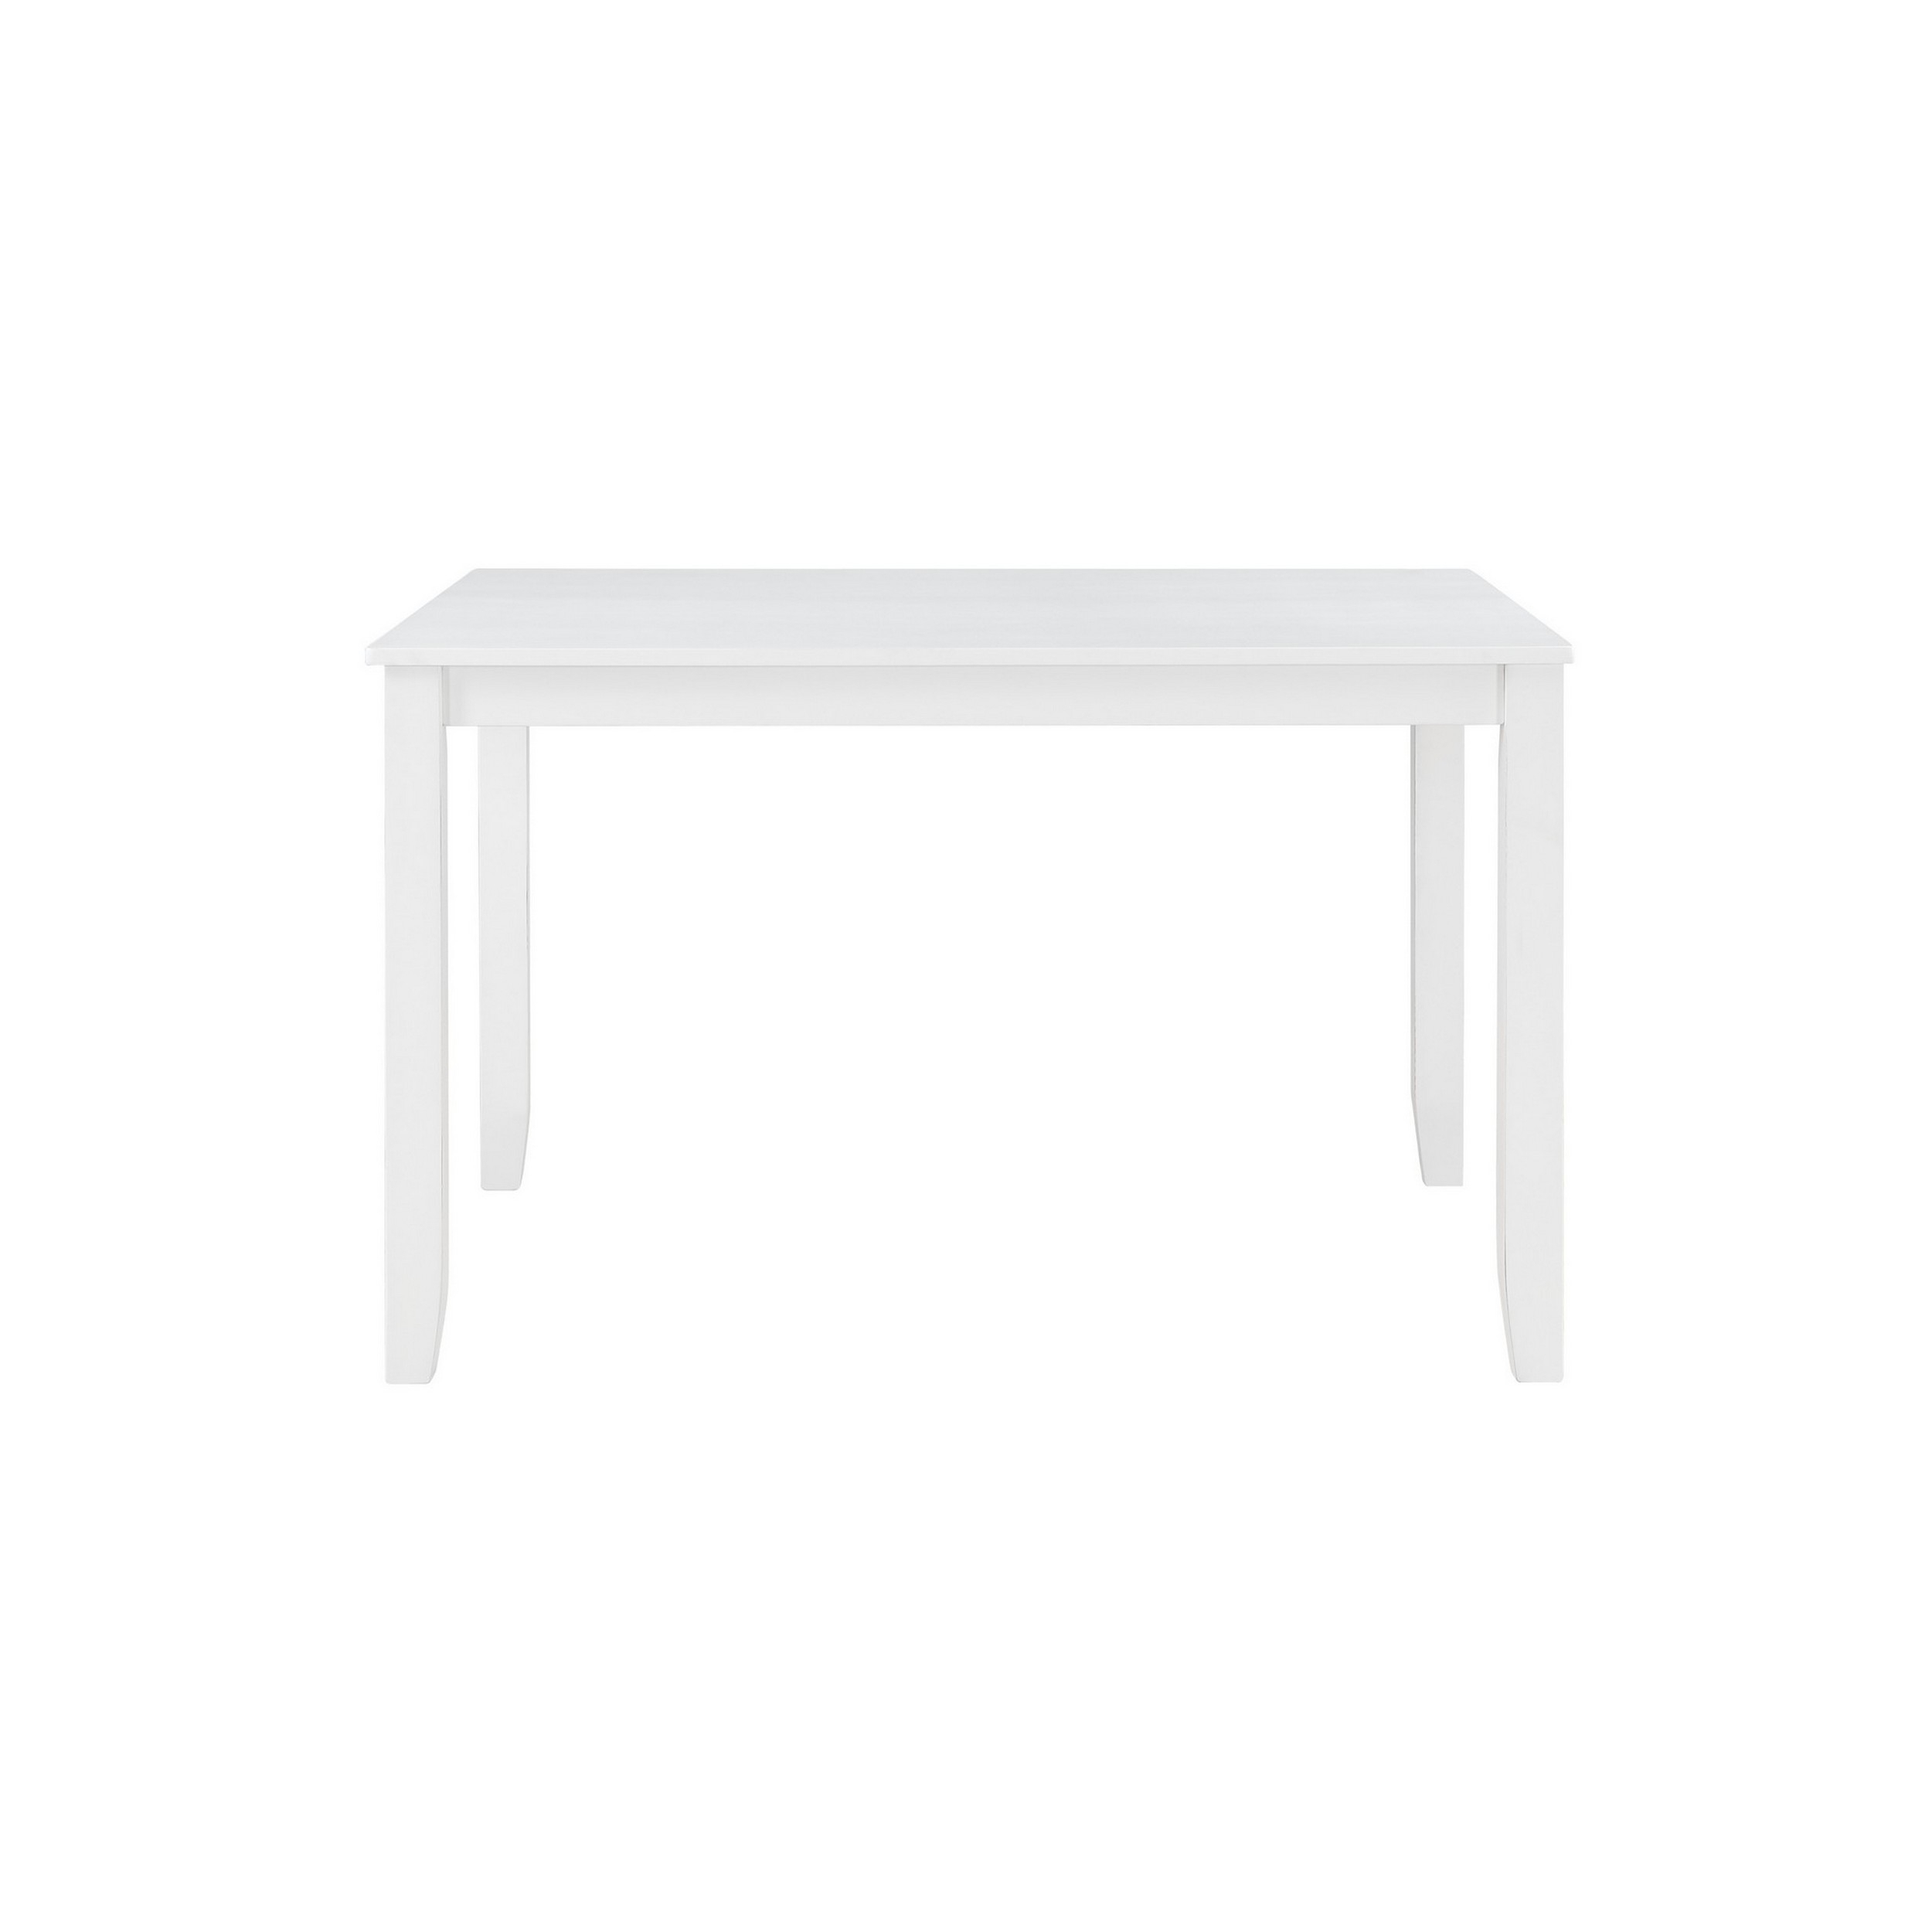 Ava 5pc Dining Table Set, 4 Lattice Back Chairs, White Rubberwood Frame -Saltoro Sherpi